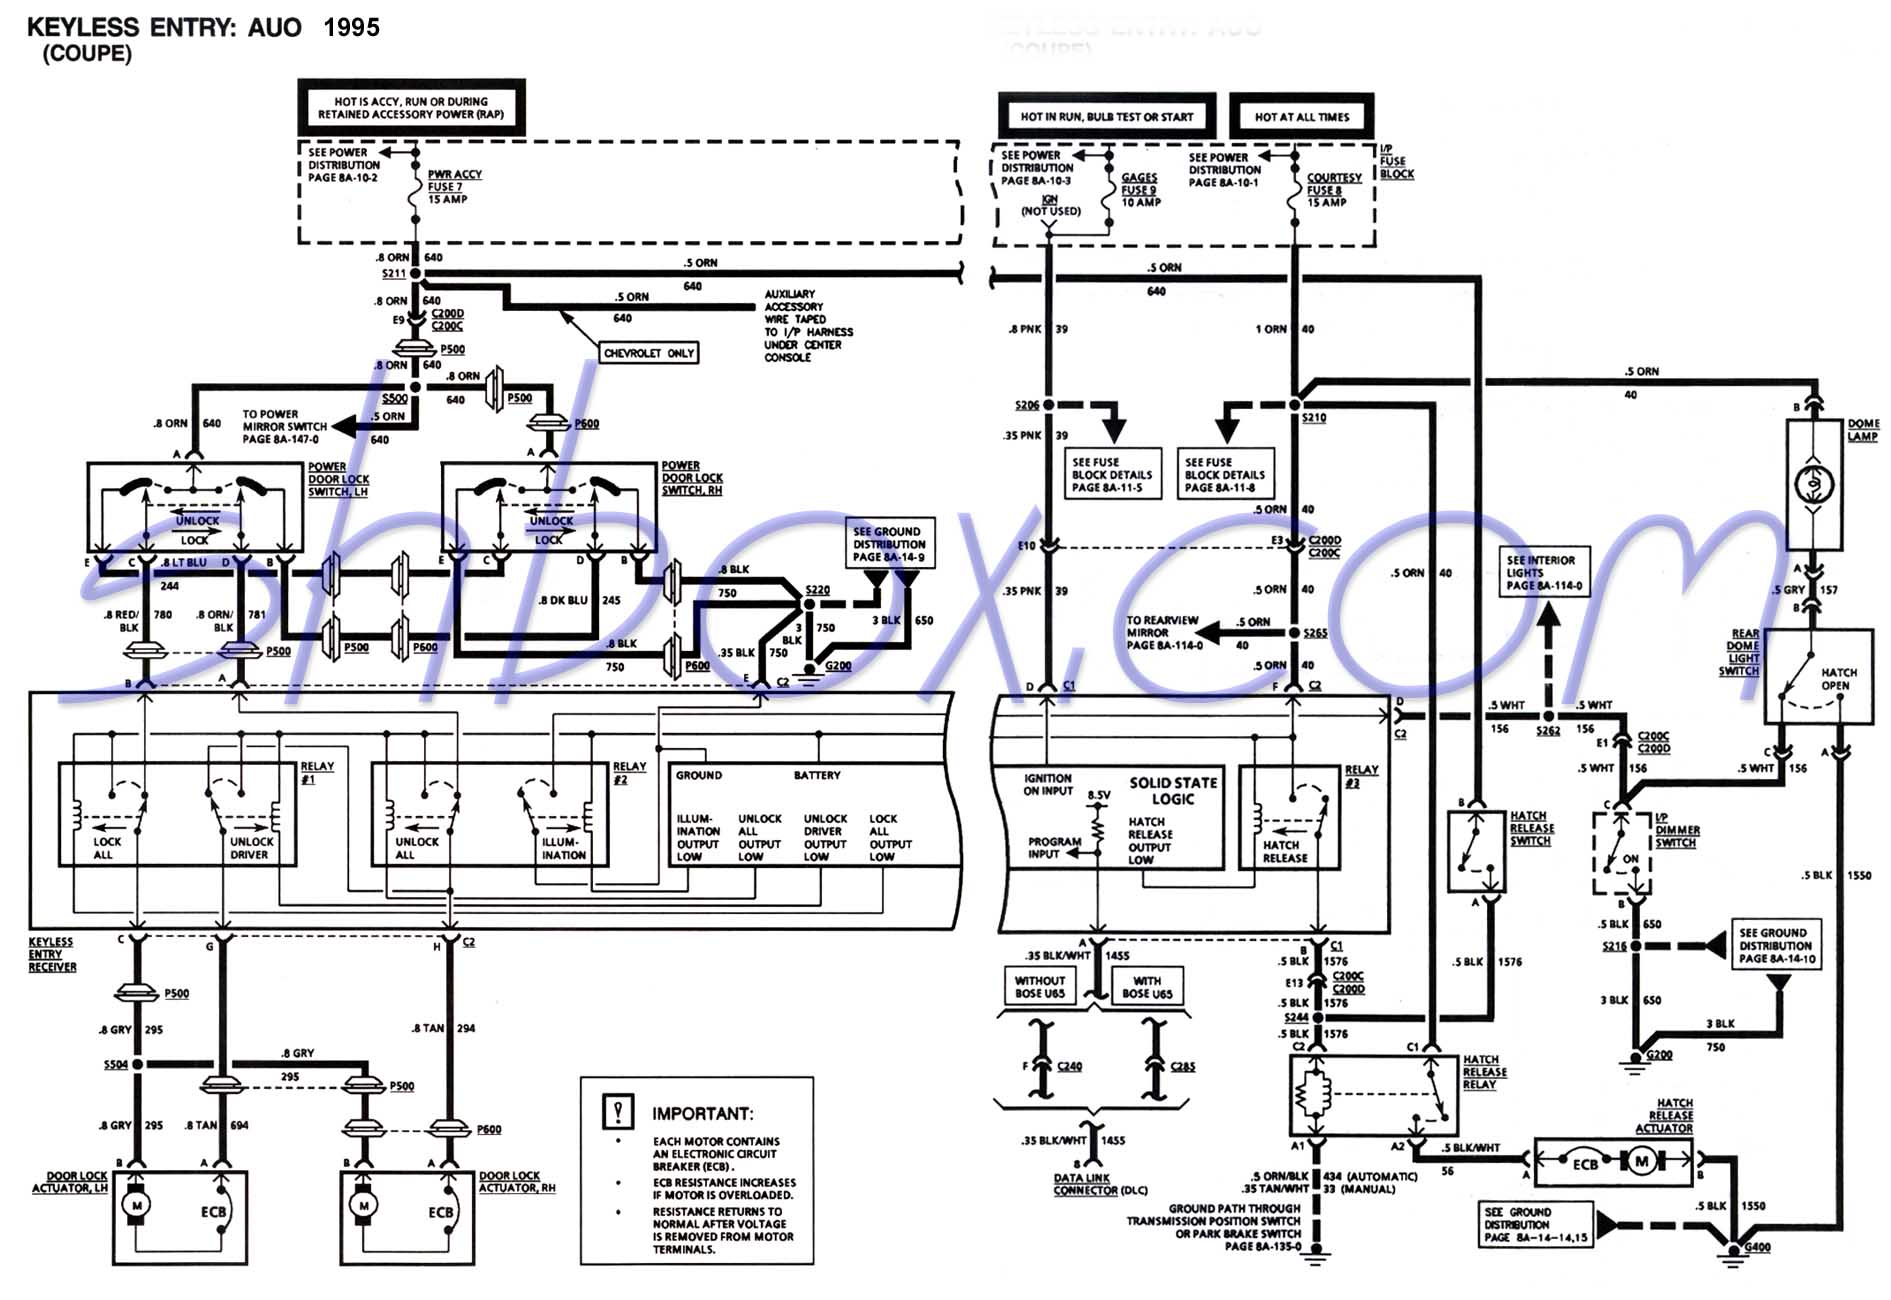 stock hondaaccord radio wiring diagram modle no. 39100-sy8-a000